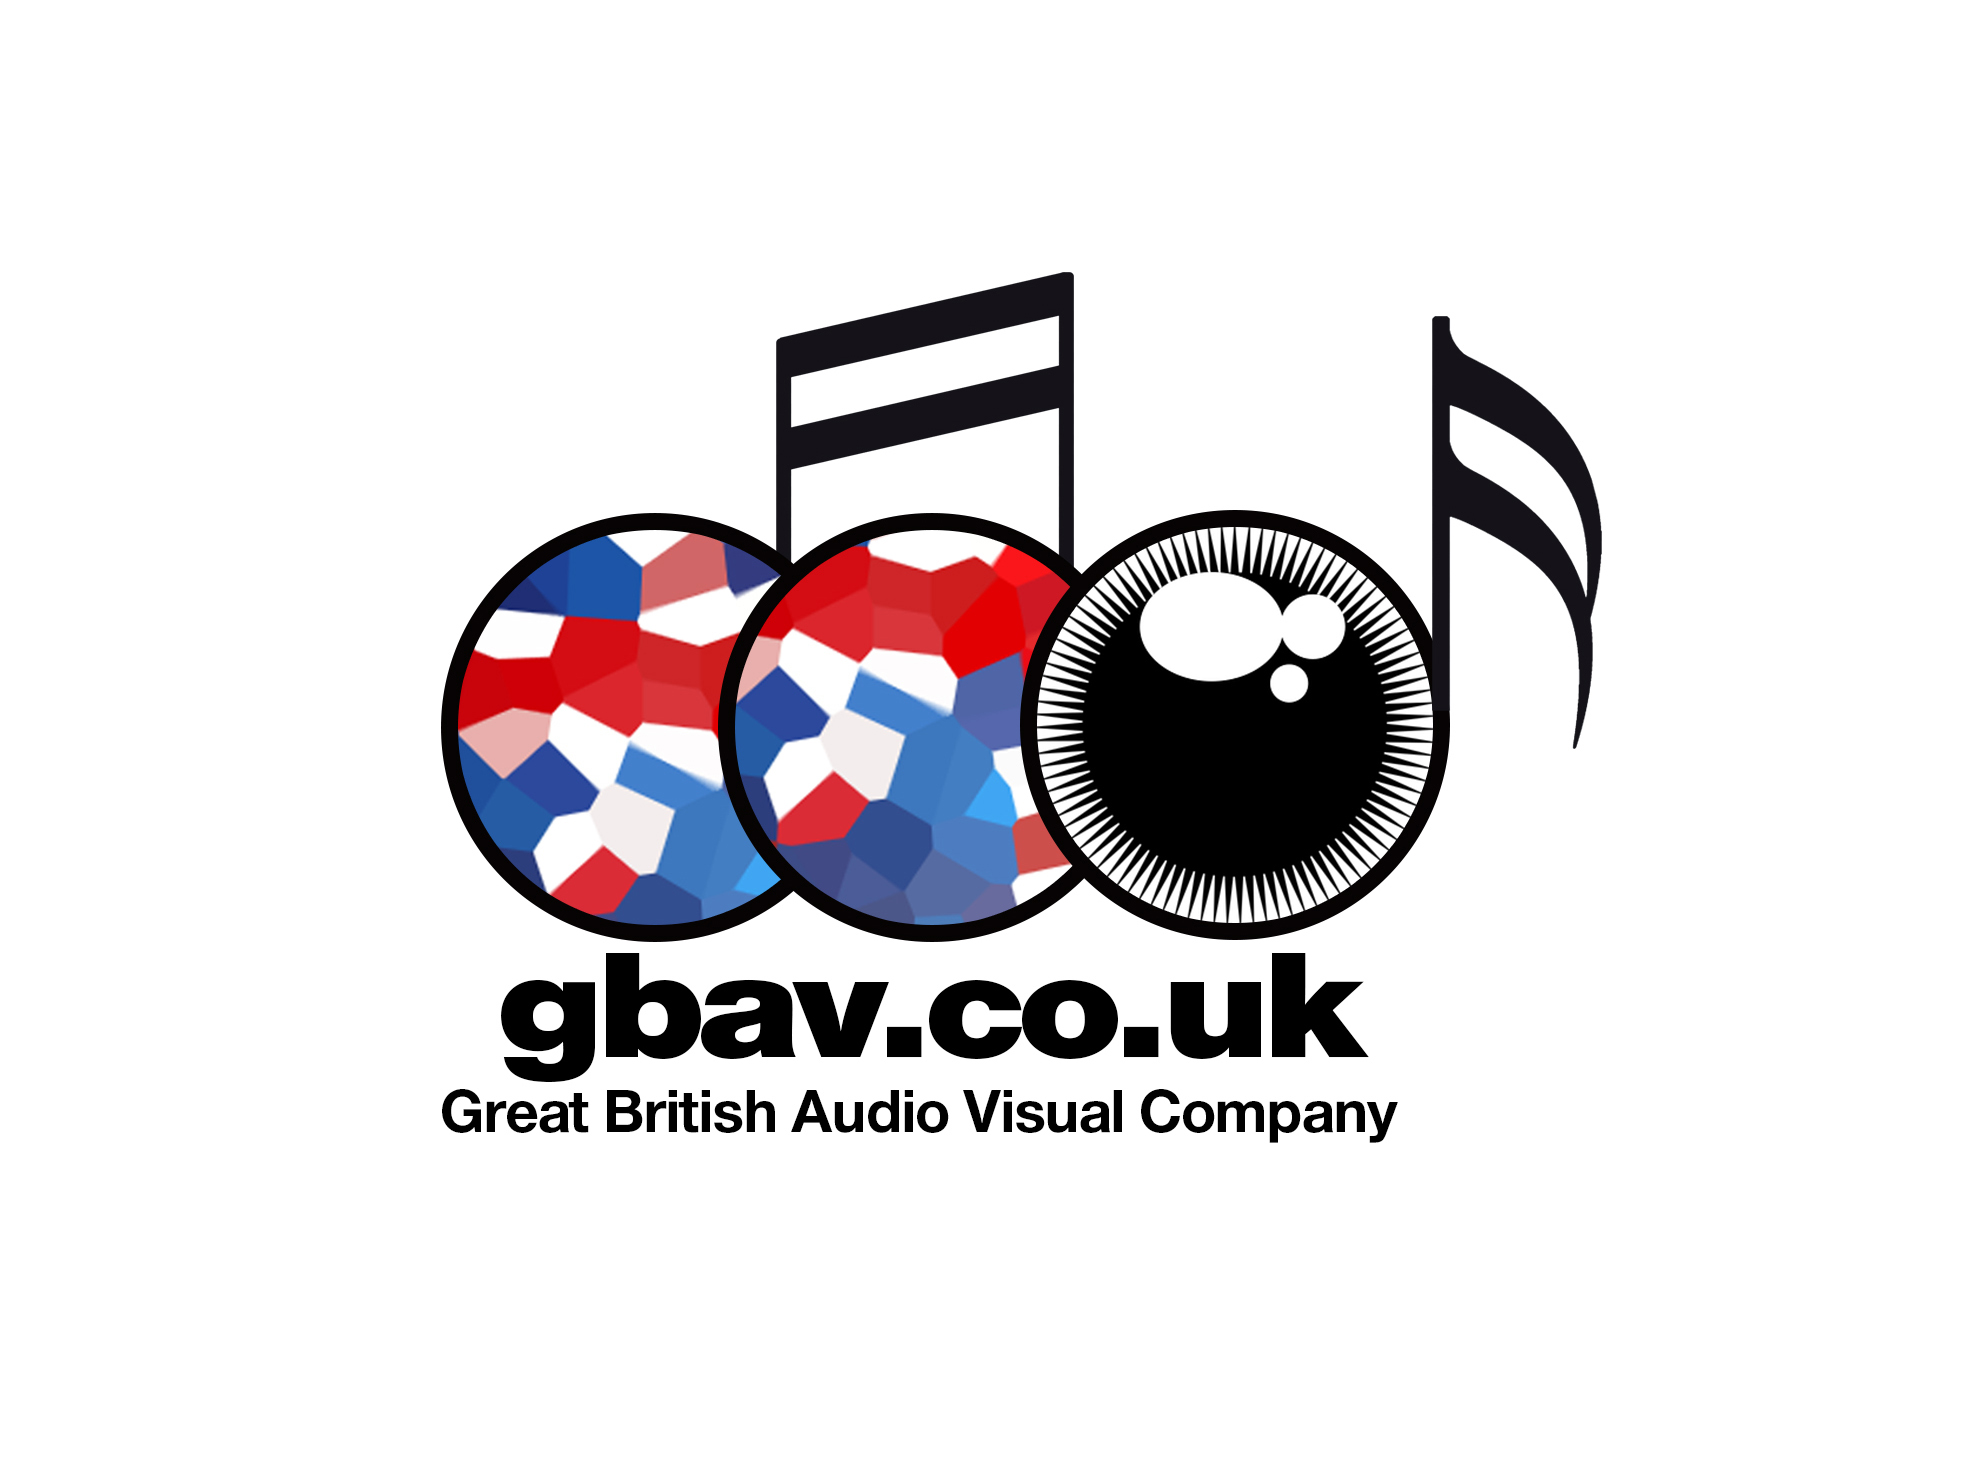 The Great British Audio Visual Company